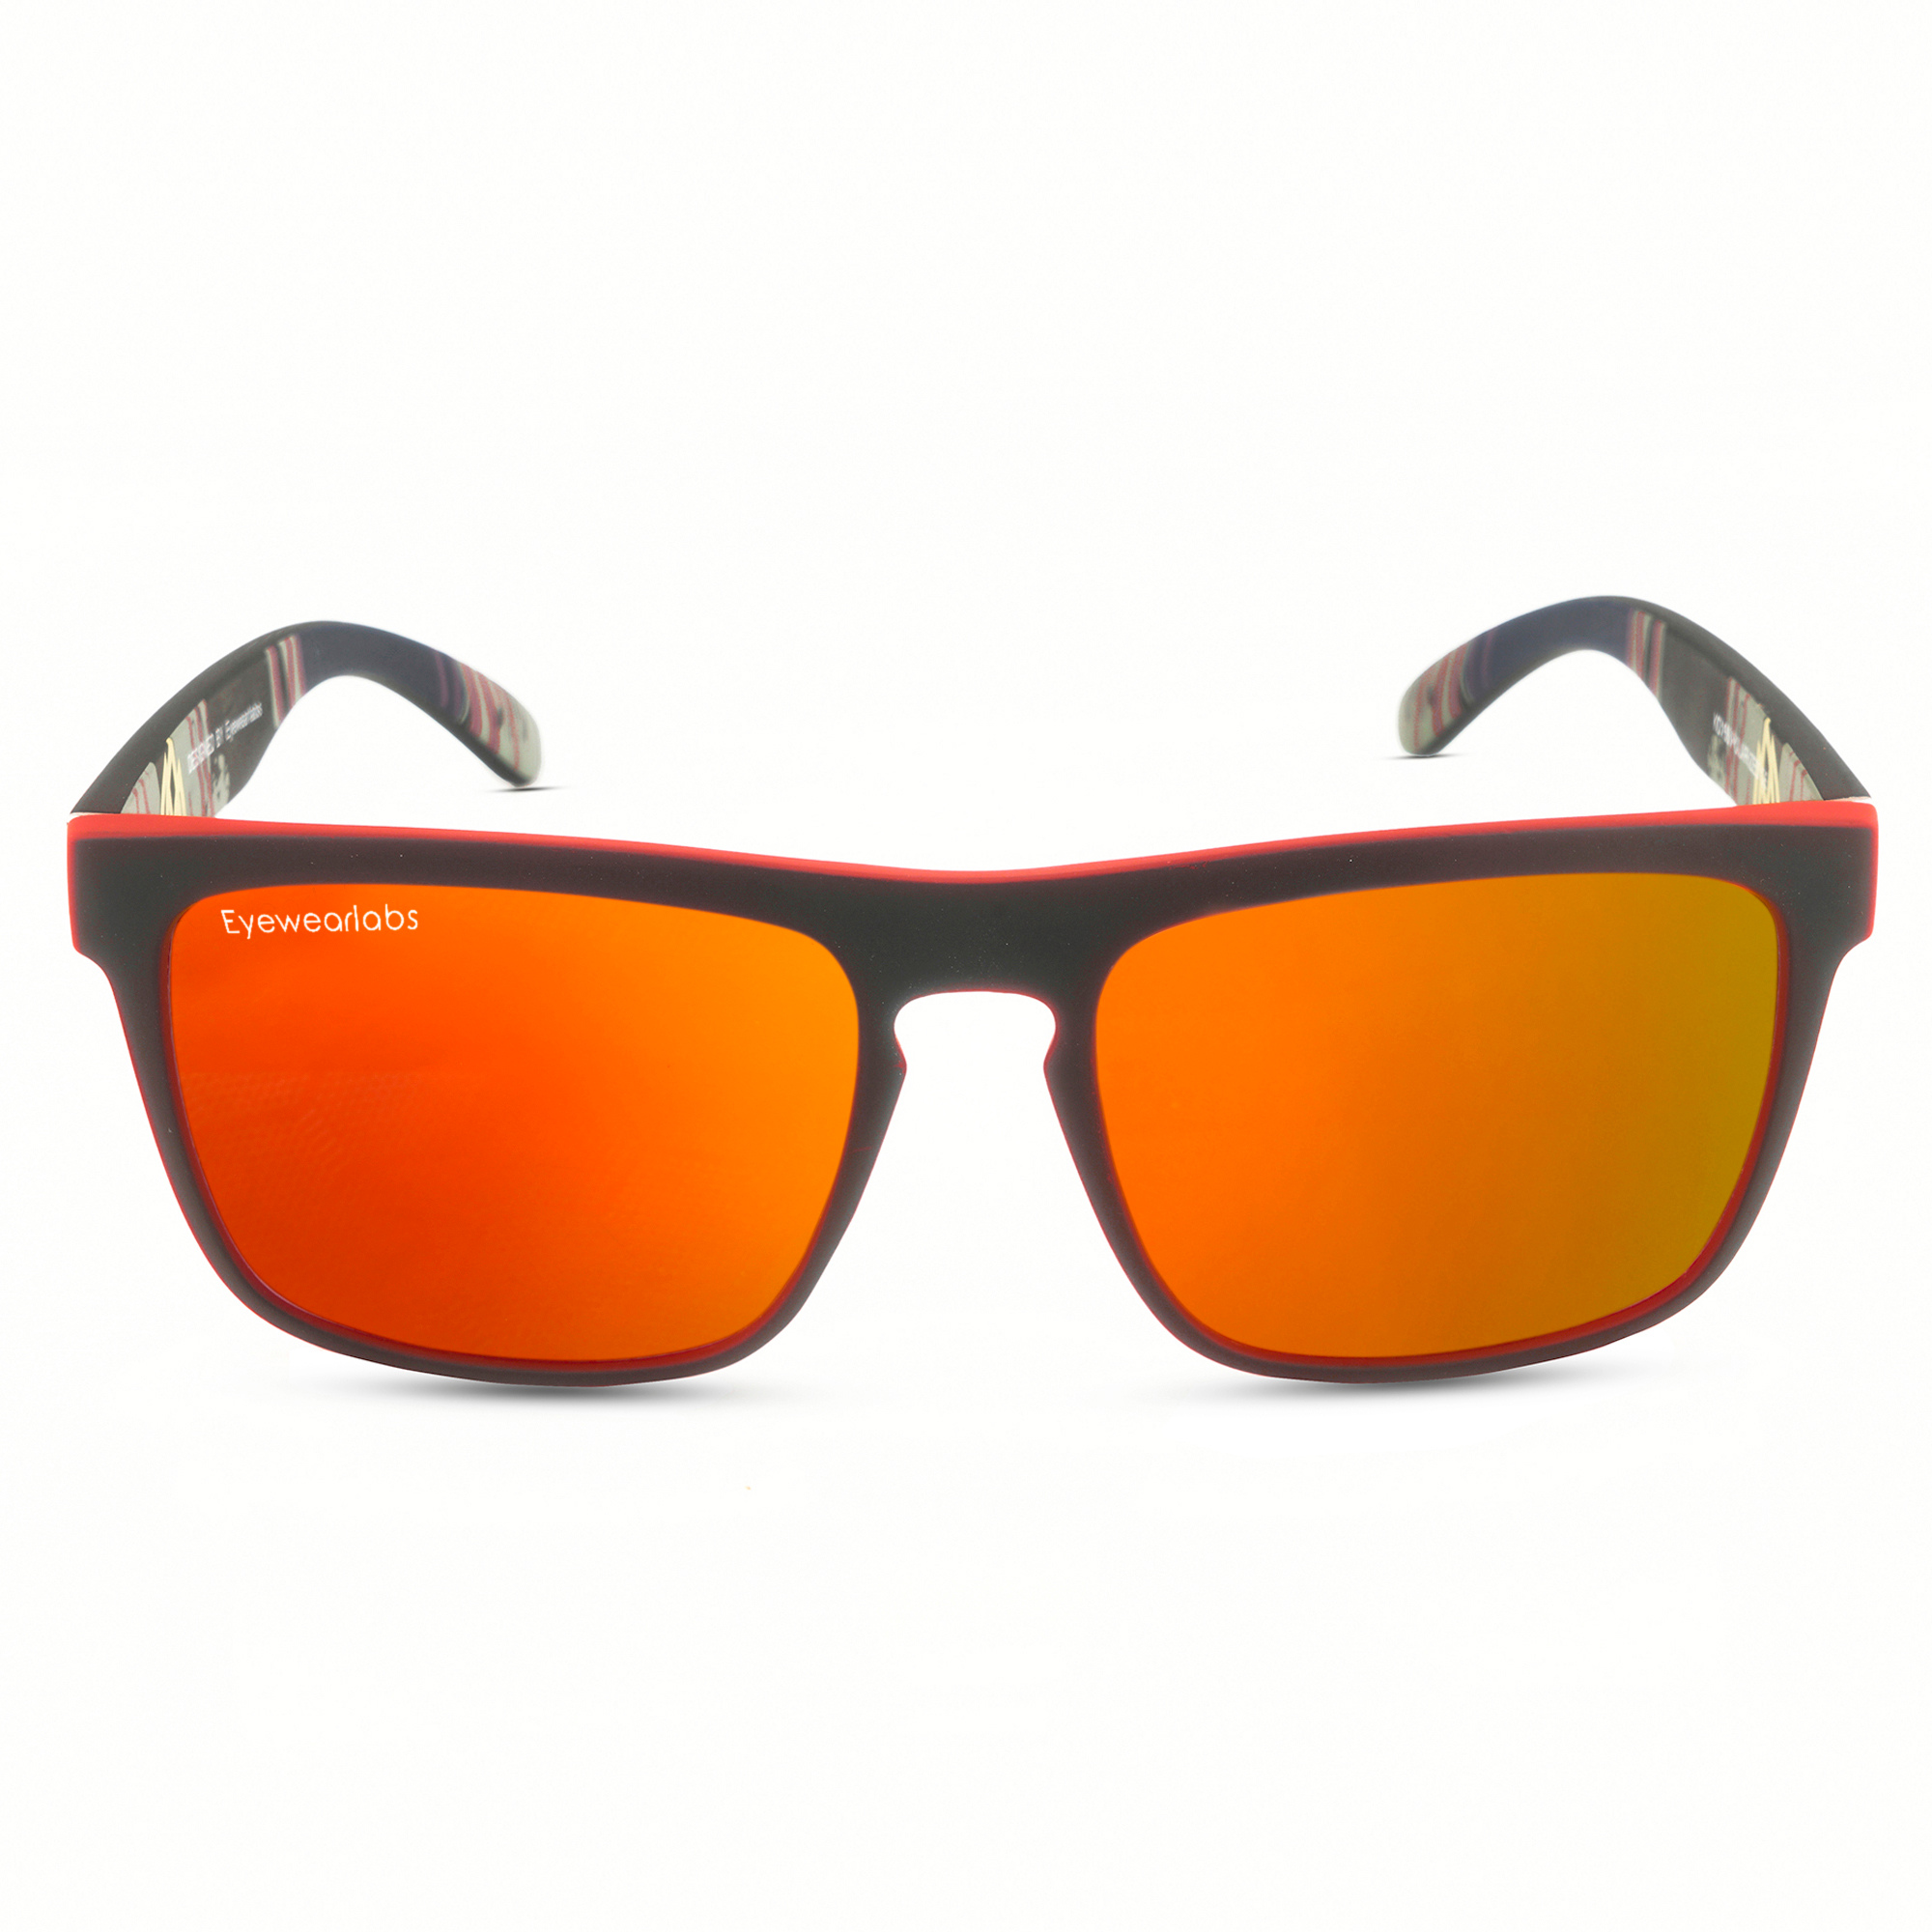 Torpedo Red Eyewear Sunglasses for Men Online at Eyewearlabs UAE – OKNO  Lifestyles